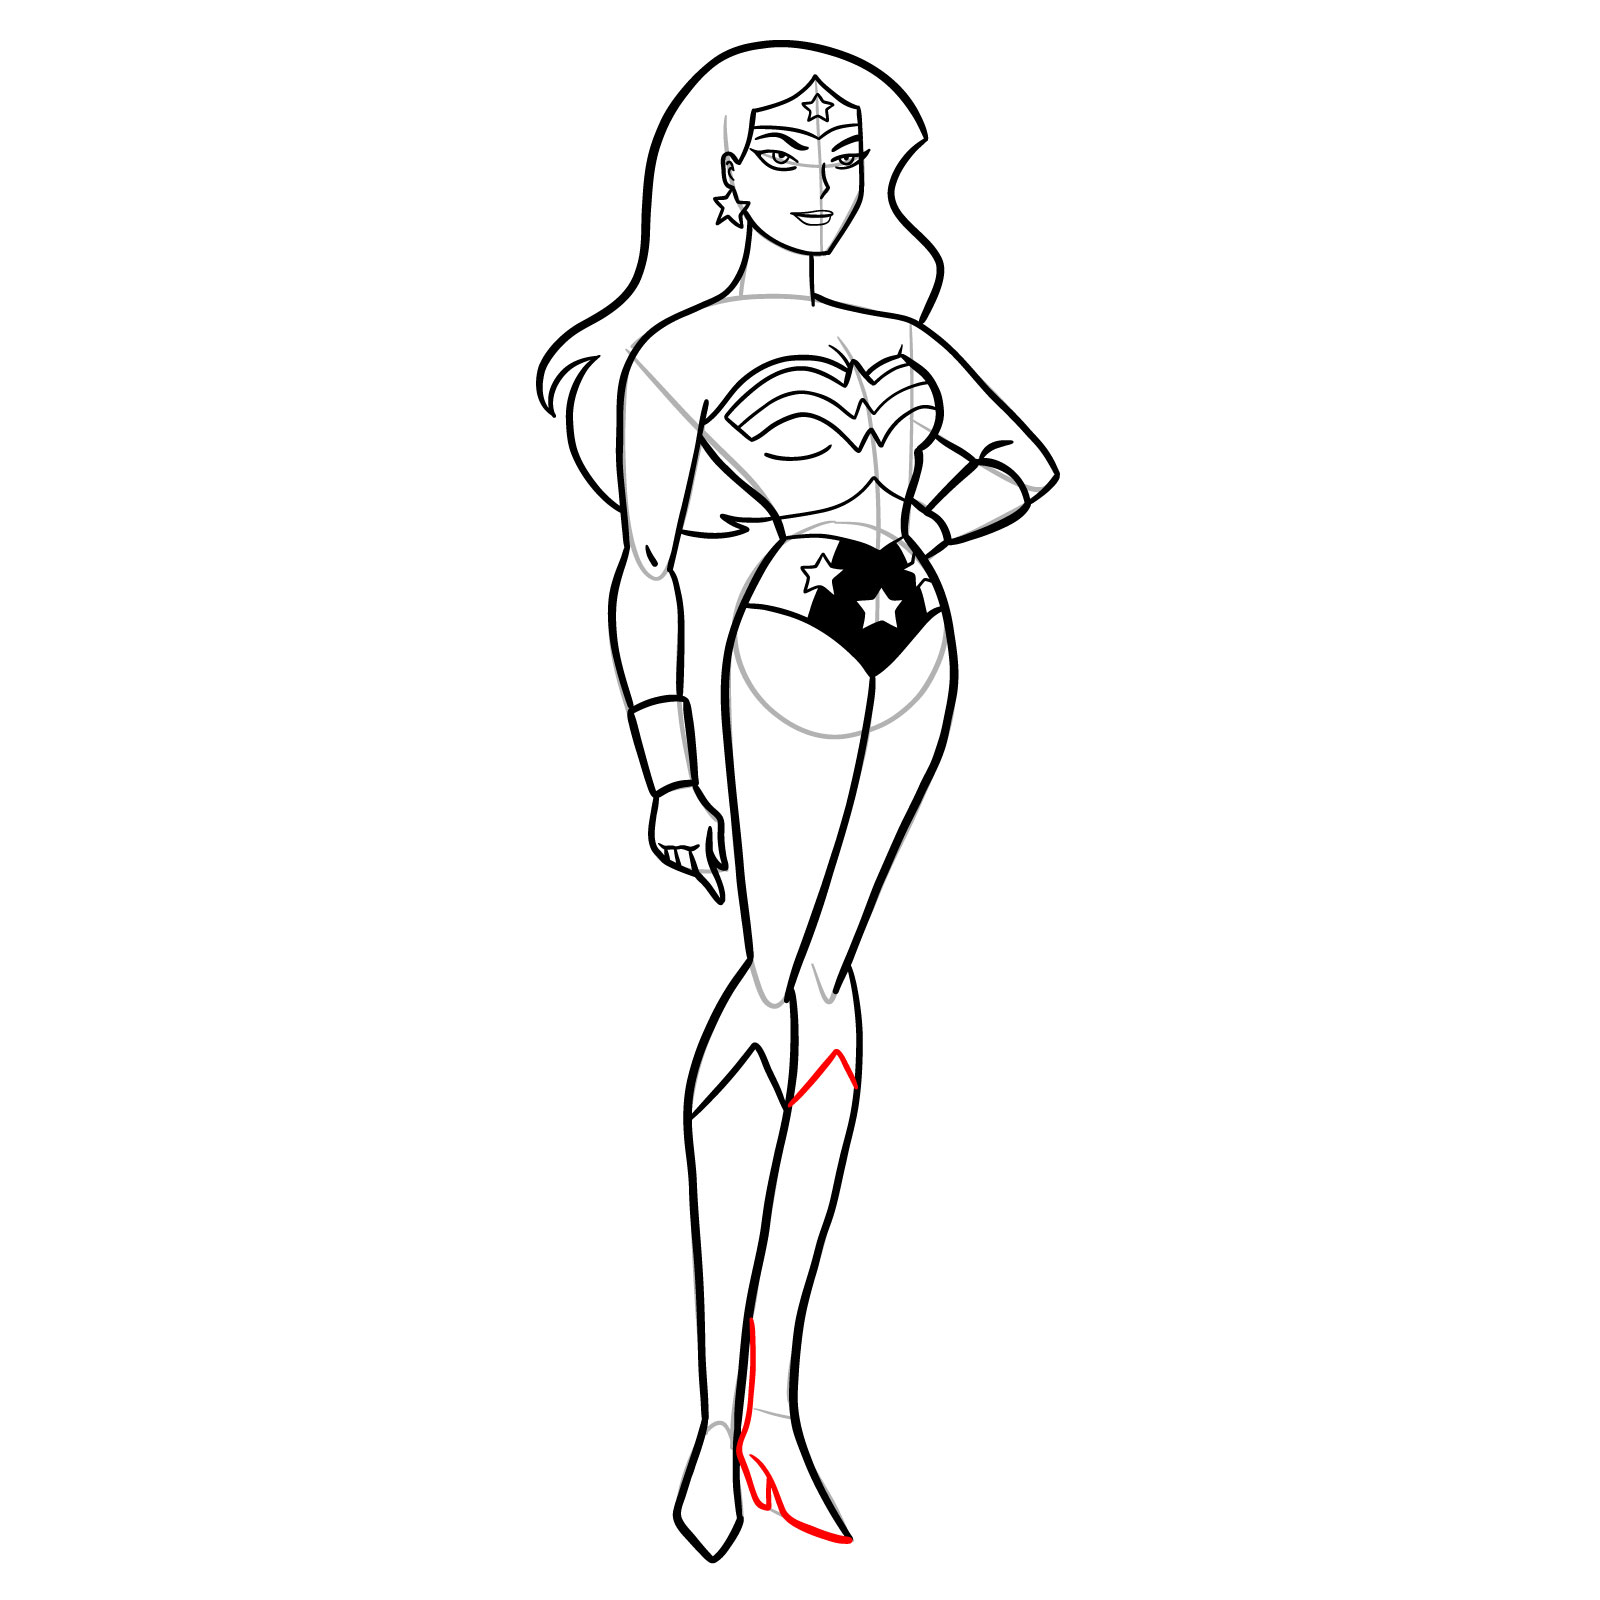 How to draw Wonder Woman cartoon style - step 30